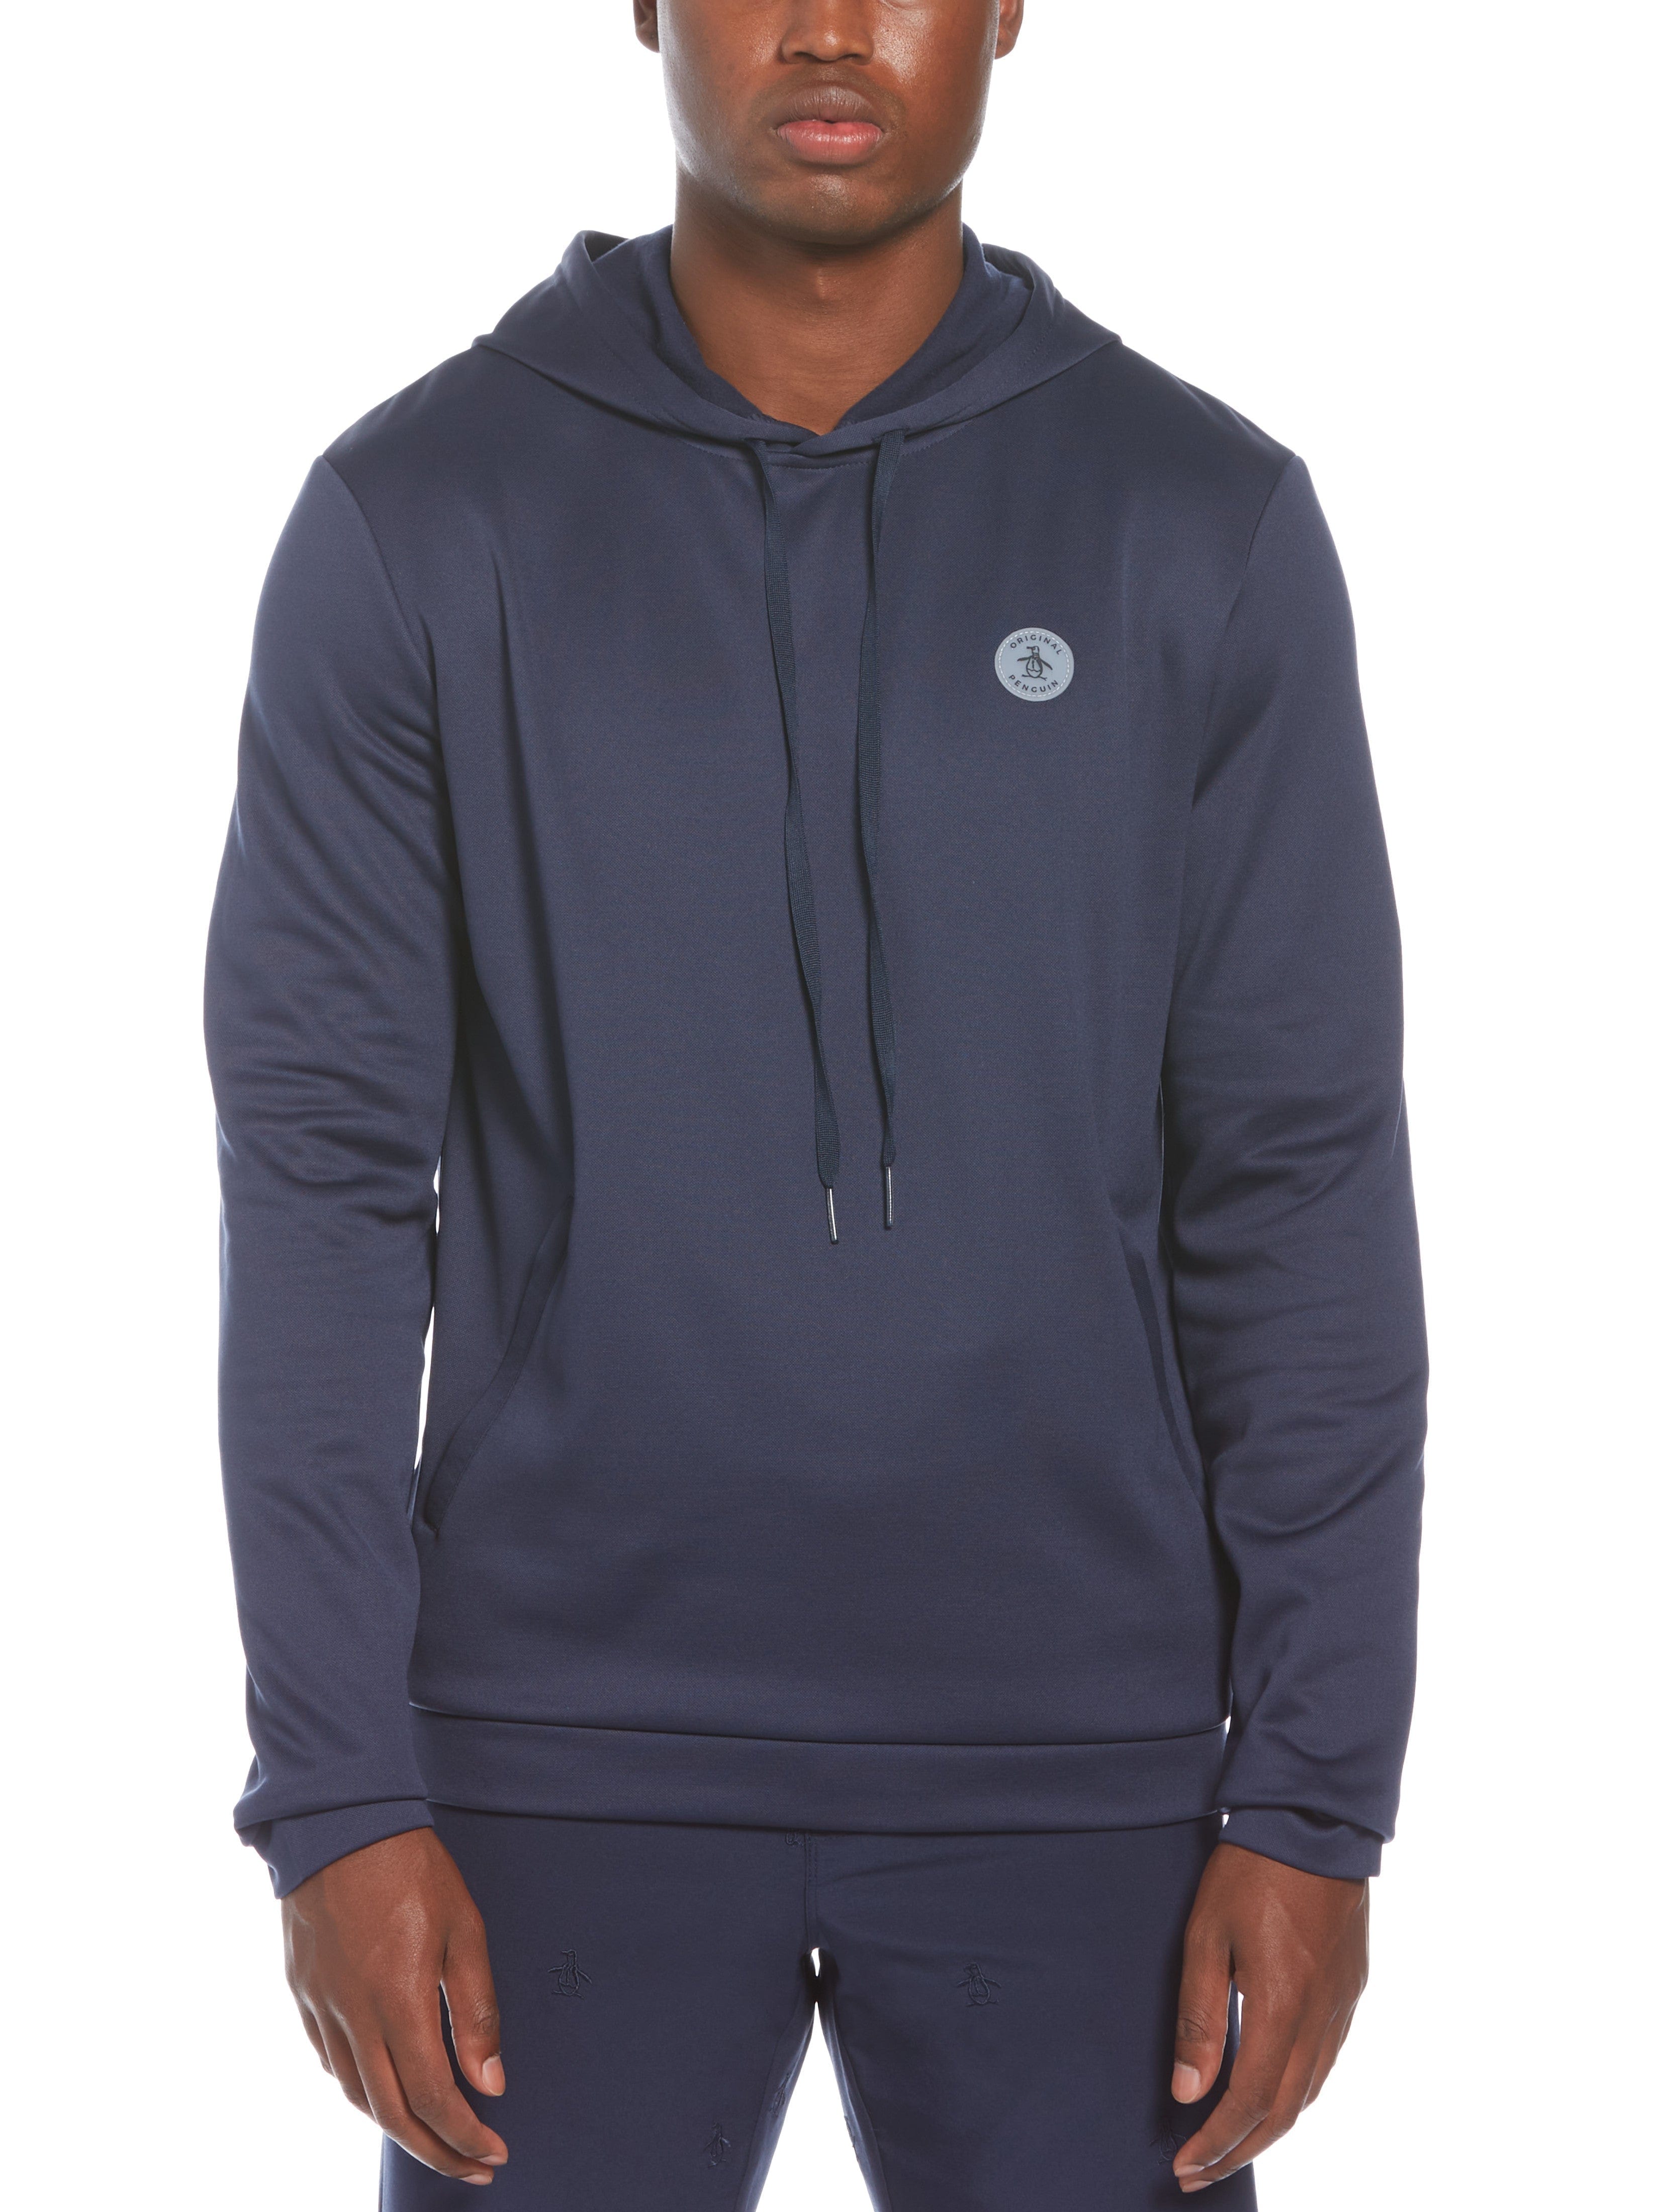 Original Penguin Mens Midweight Layering Golf Hoodie Jacket Top, Size Small, Dark Navy Blue, 100% Polyester | Golf Apparel Shop